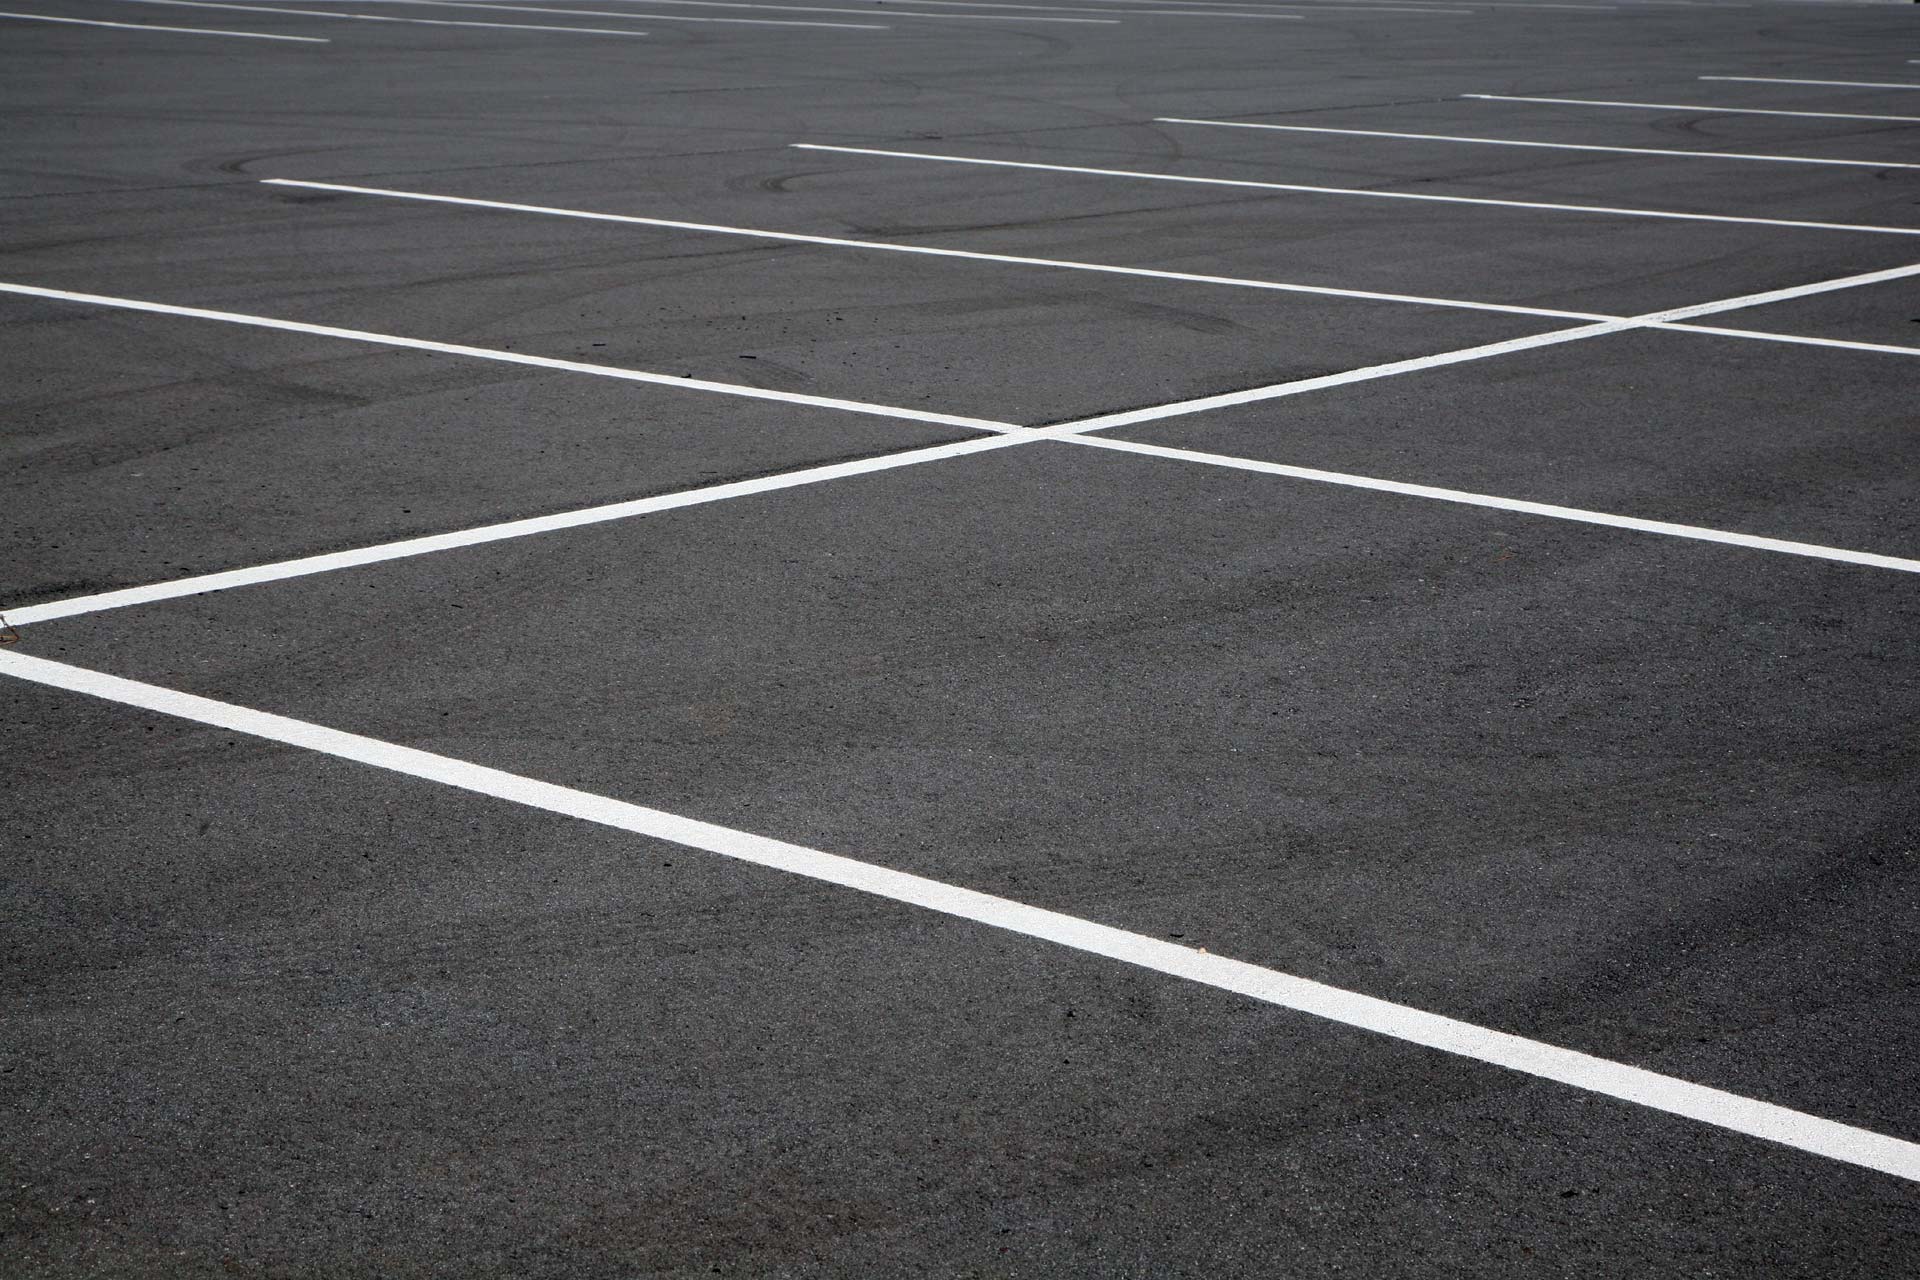 Freshly laid asphalt carpark with painted lines